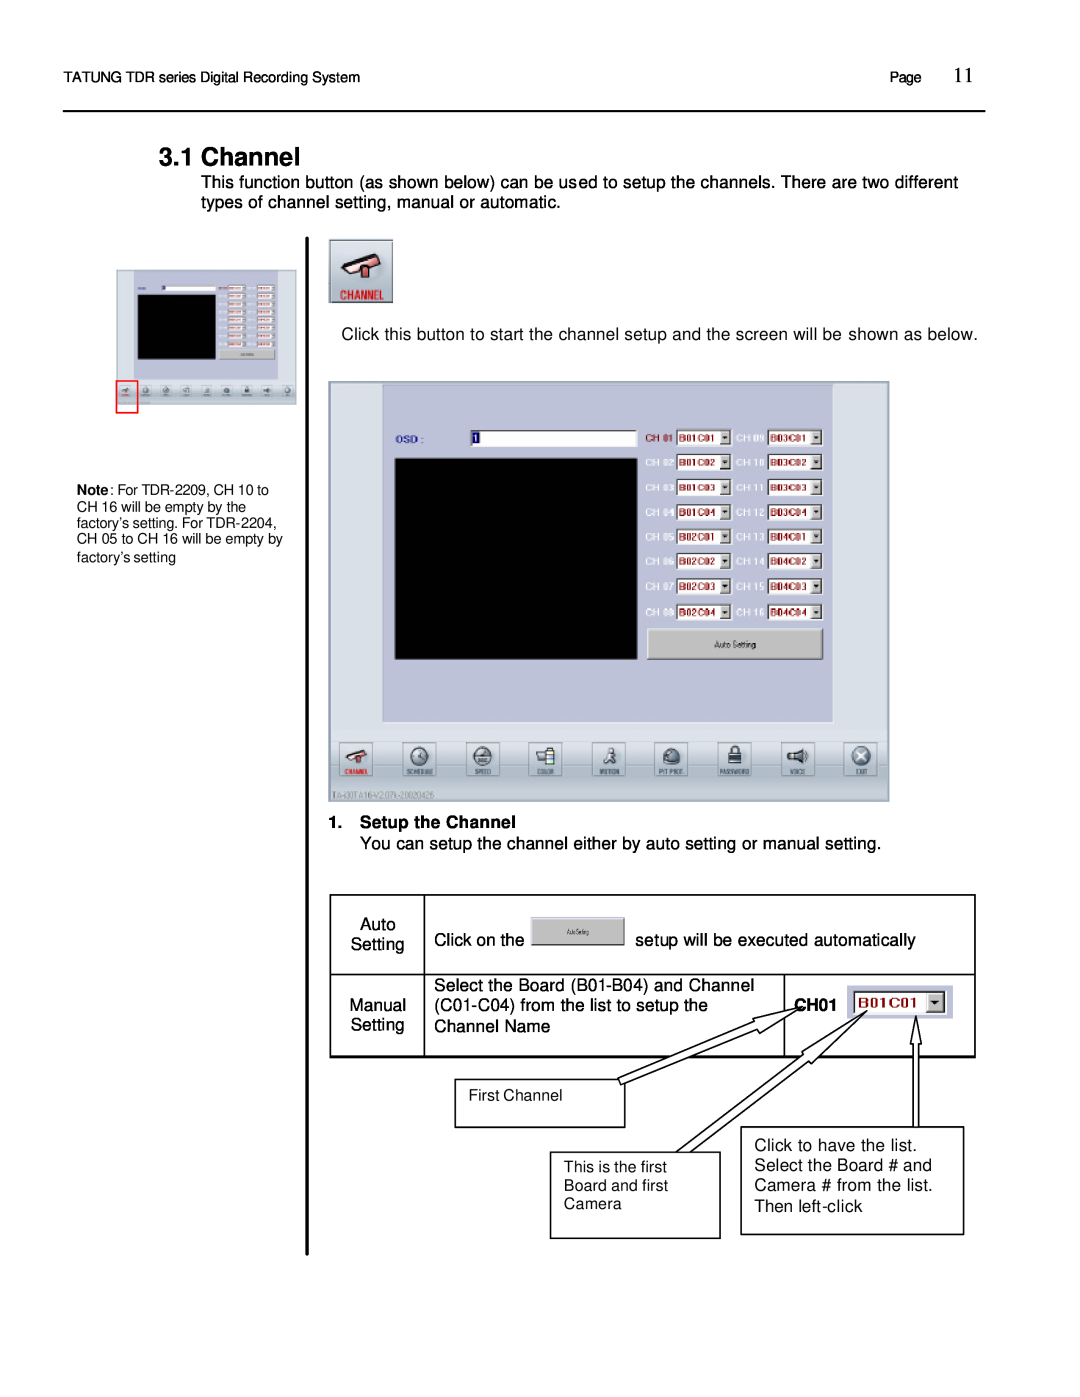 Tatung TDR-22XX operation manual Setup the Channel, CH01 